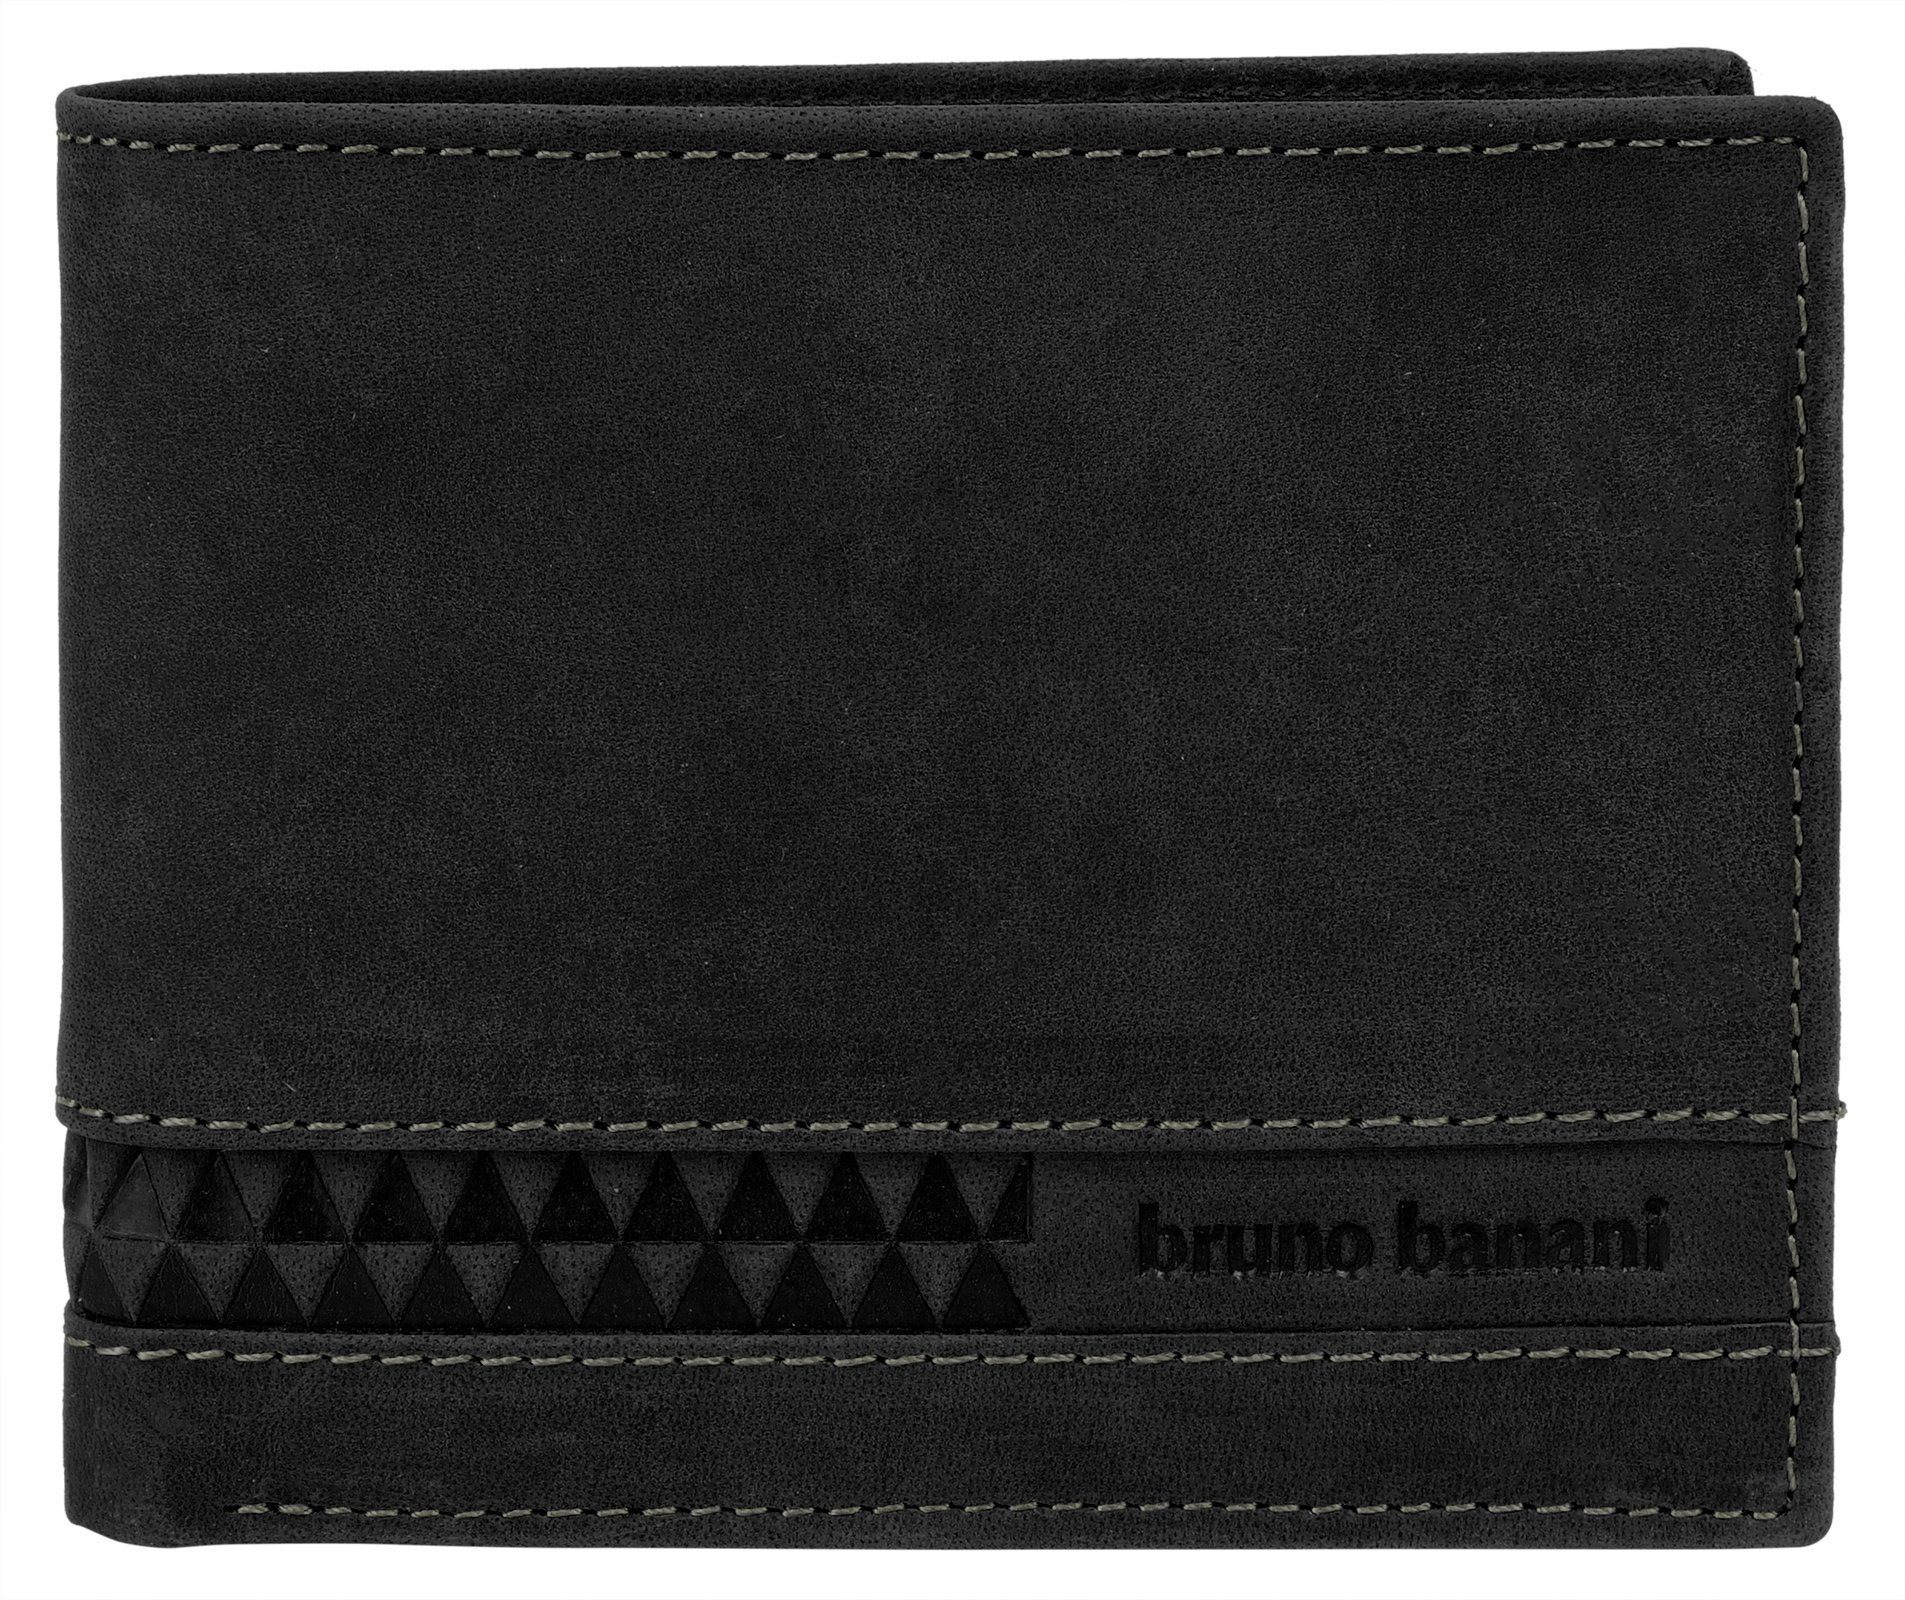 Bruno Banani Geldbörse, echt Leder schwarz | Geldbörsen